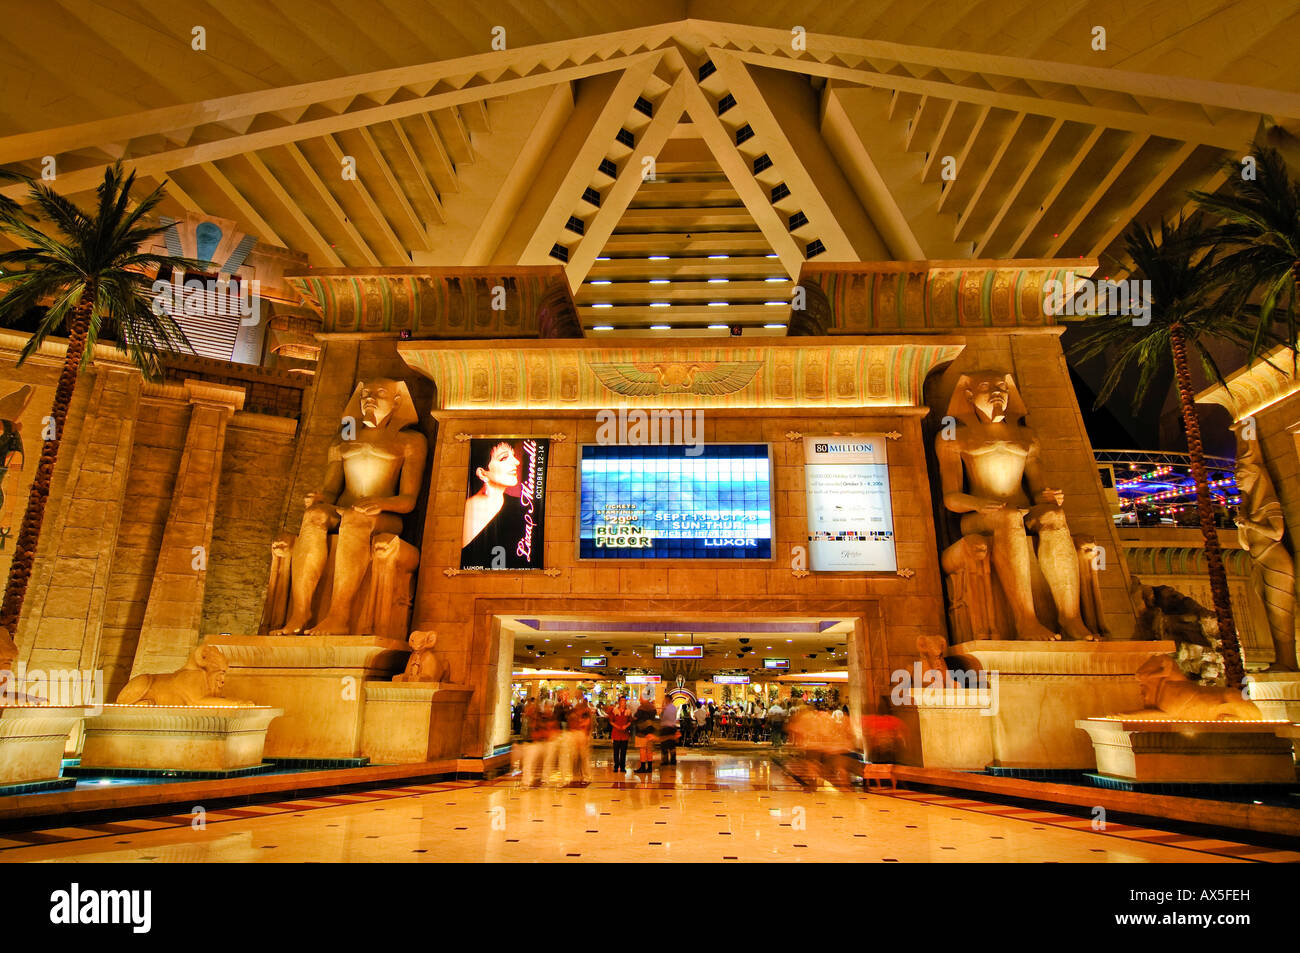 LAS VEGAS - NOV 17 : The Interior Of Mandalay Bay Resort On November 17,  2015 In Las Vegas. The Resort, Which Opened In 1999, Has 3,309 Hotel Rooms,  24 Elevators And